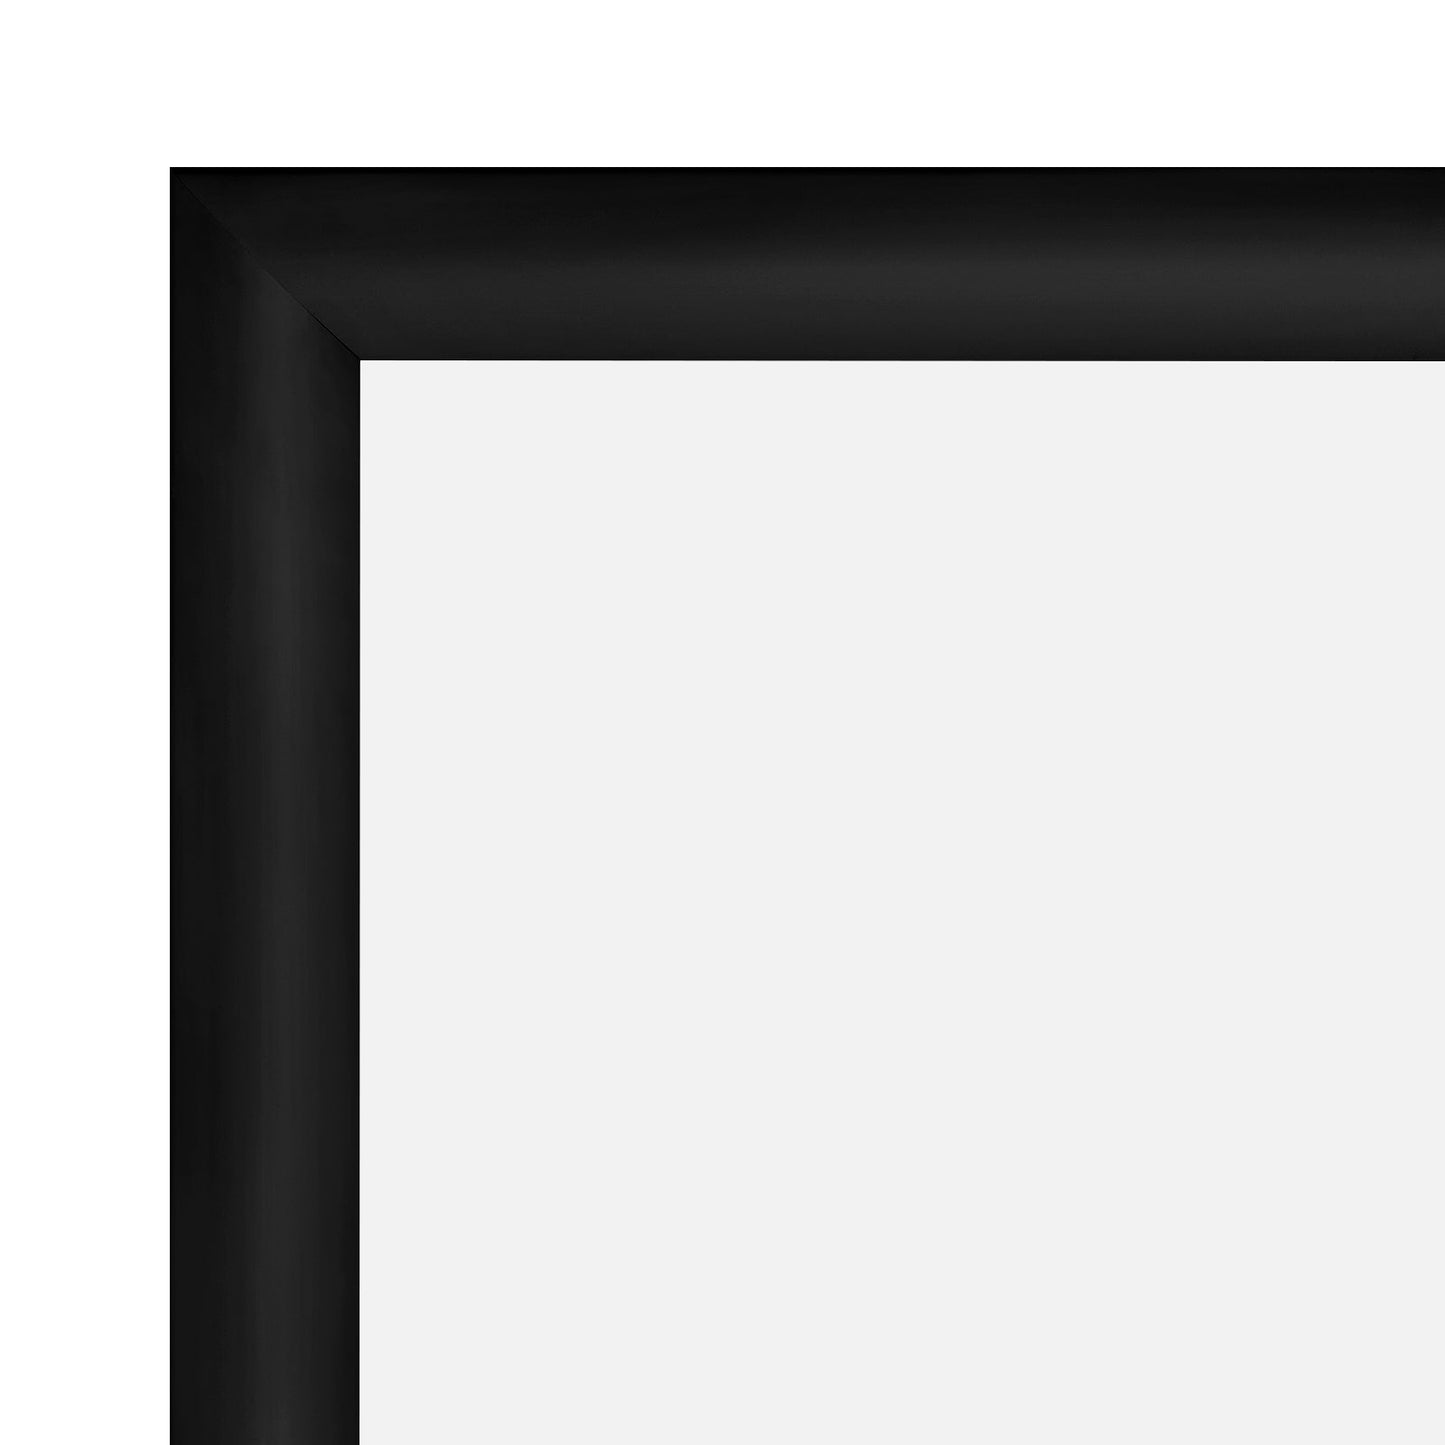 28x36 Black SnapeZo® Snap Frame - 1.2" Profile